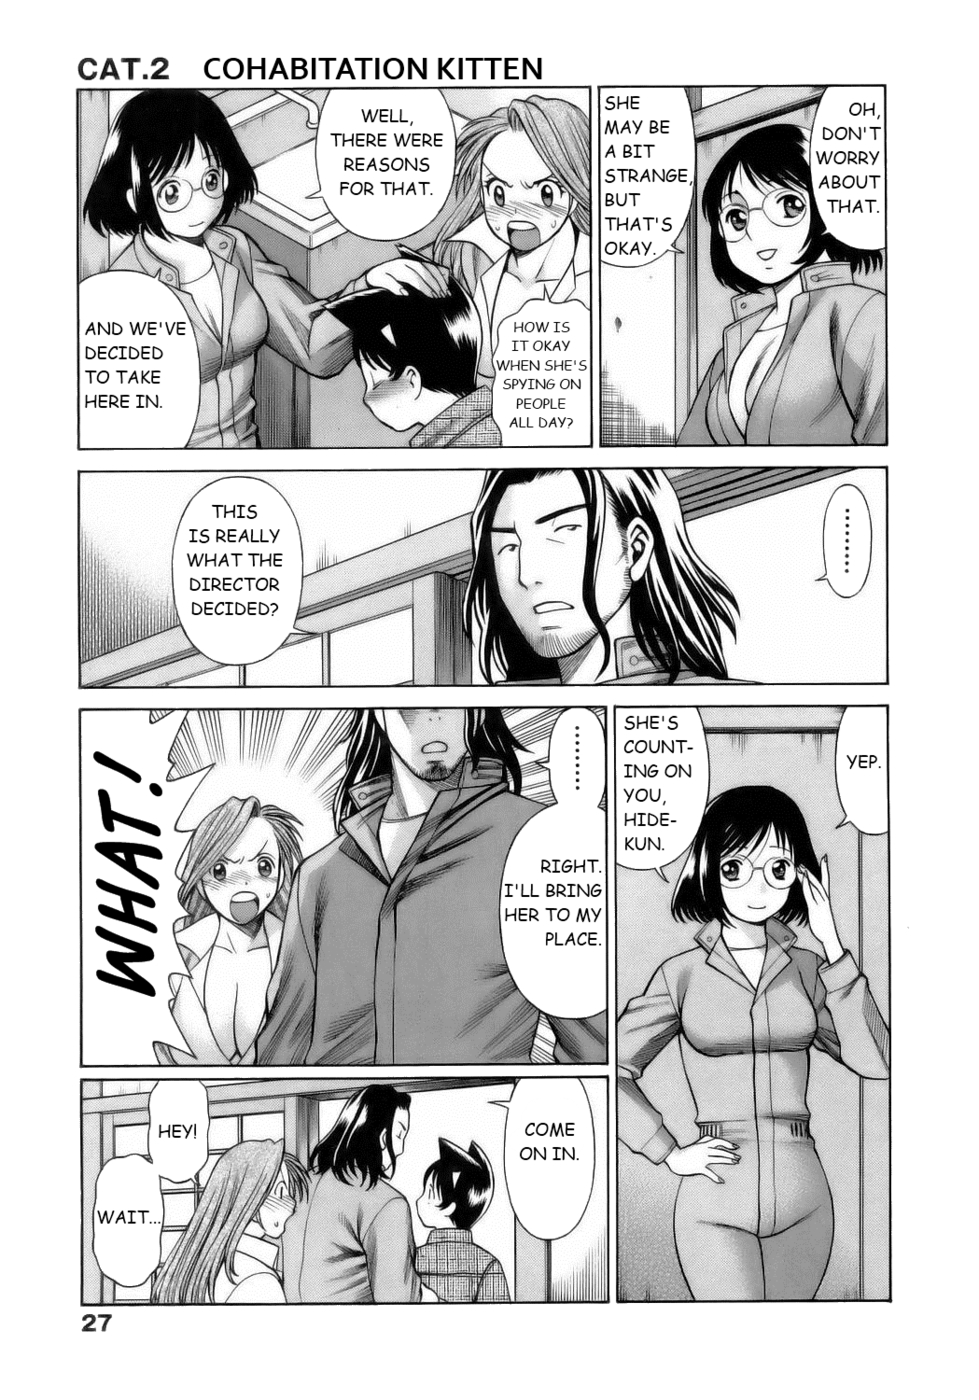 Hentai Manga Comic-Coneco !-Chapter 2-Cohabitation Kitten-3